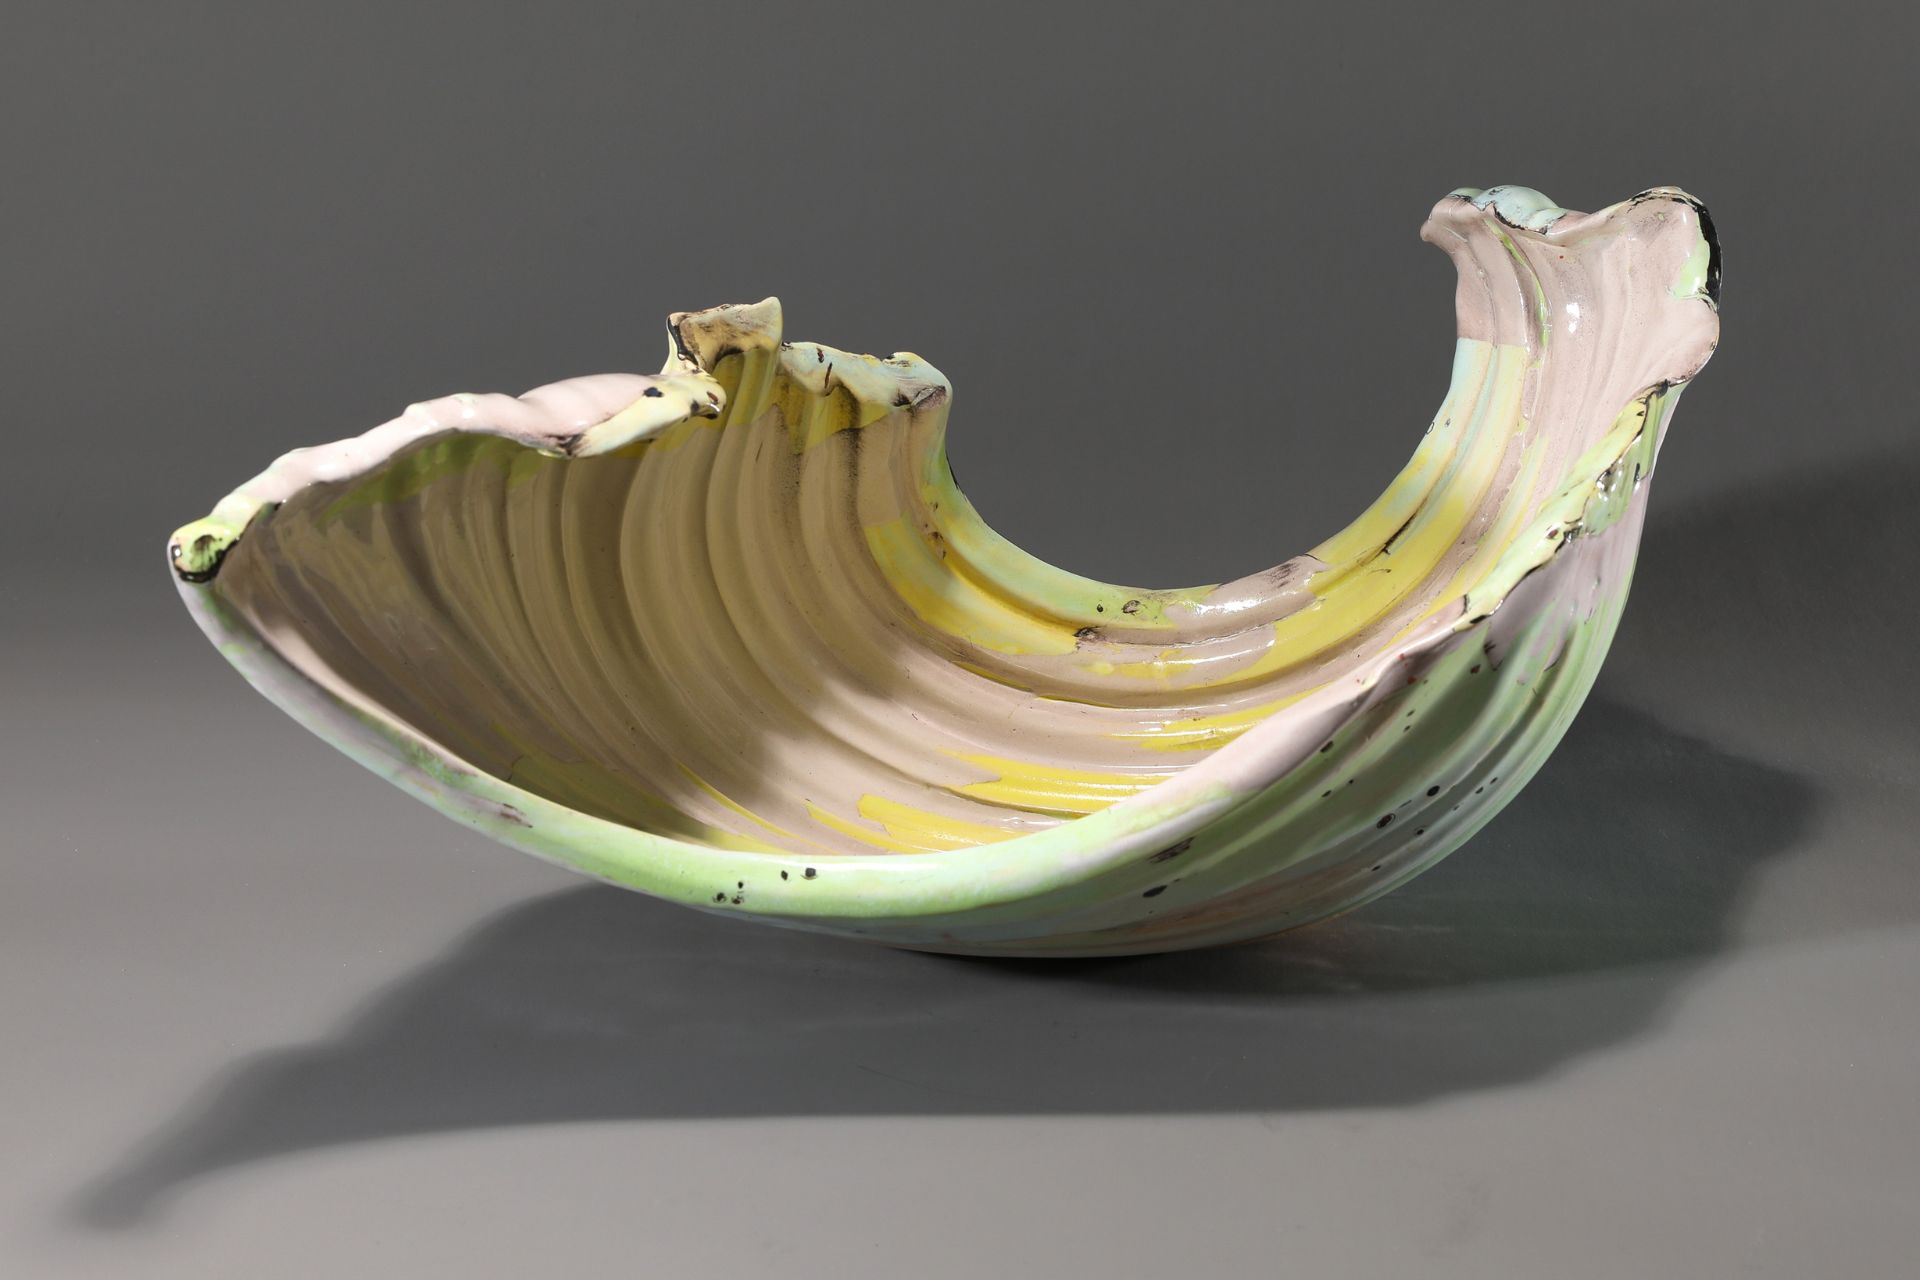 Karl Fulle, ceramic object wave, 2010 - Image 3 of 8